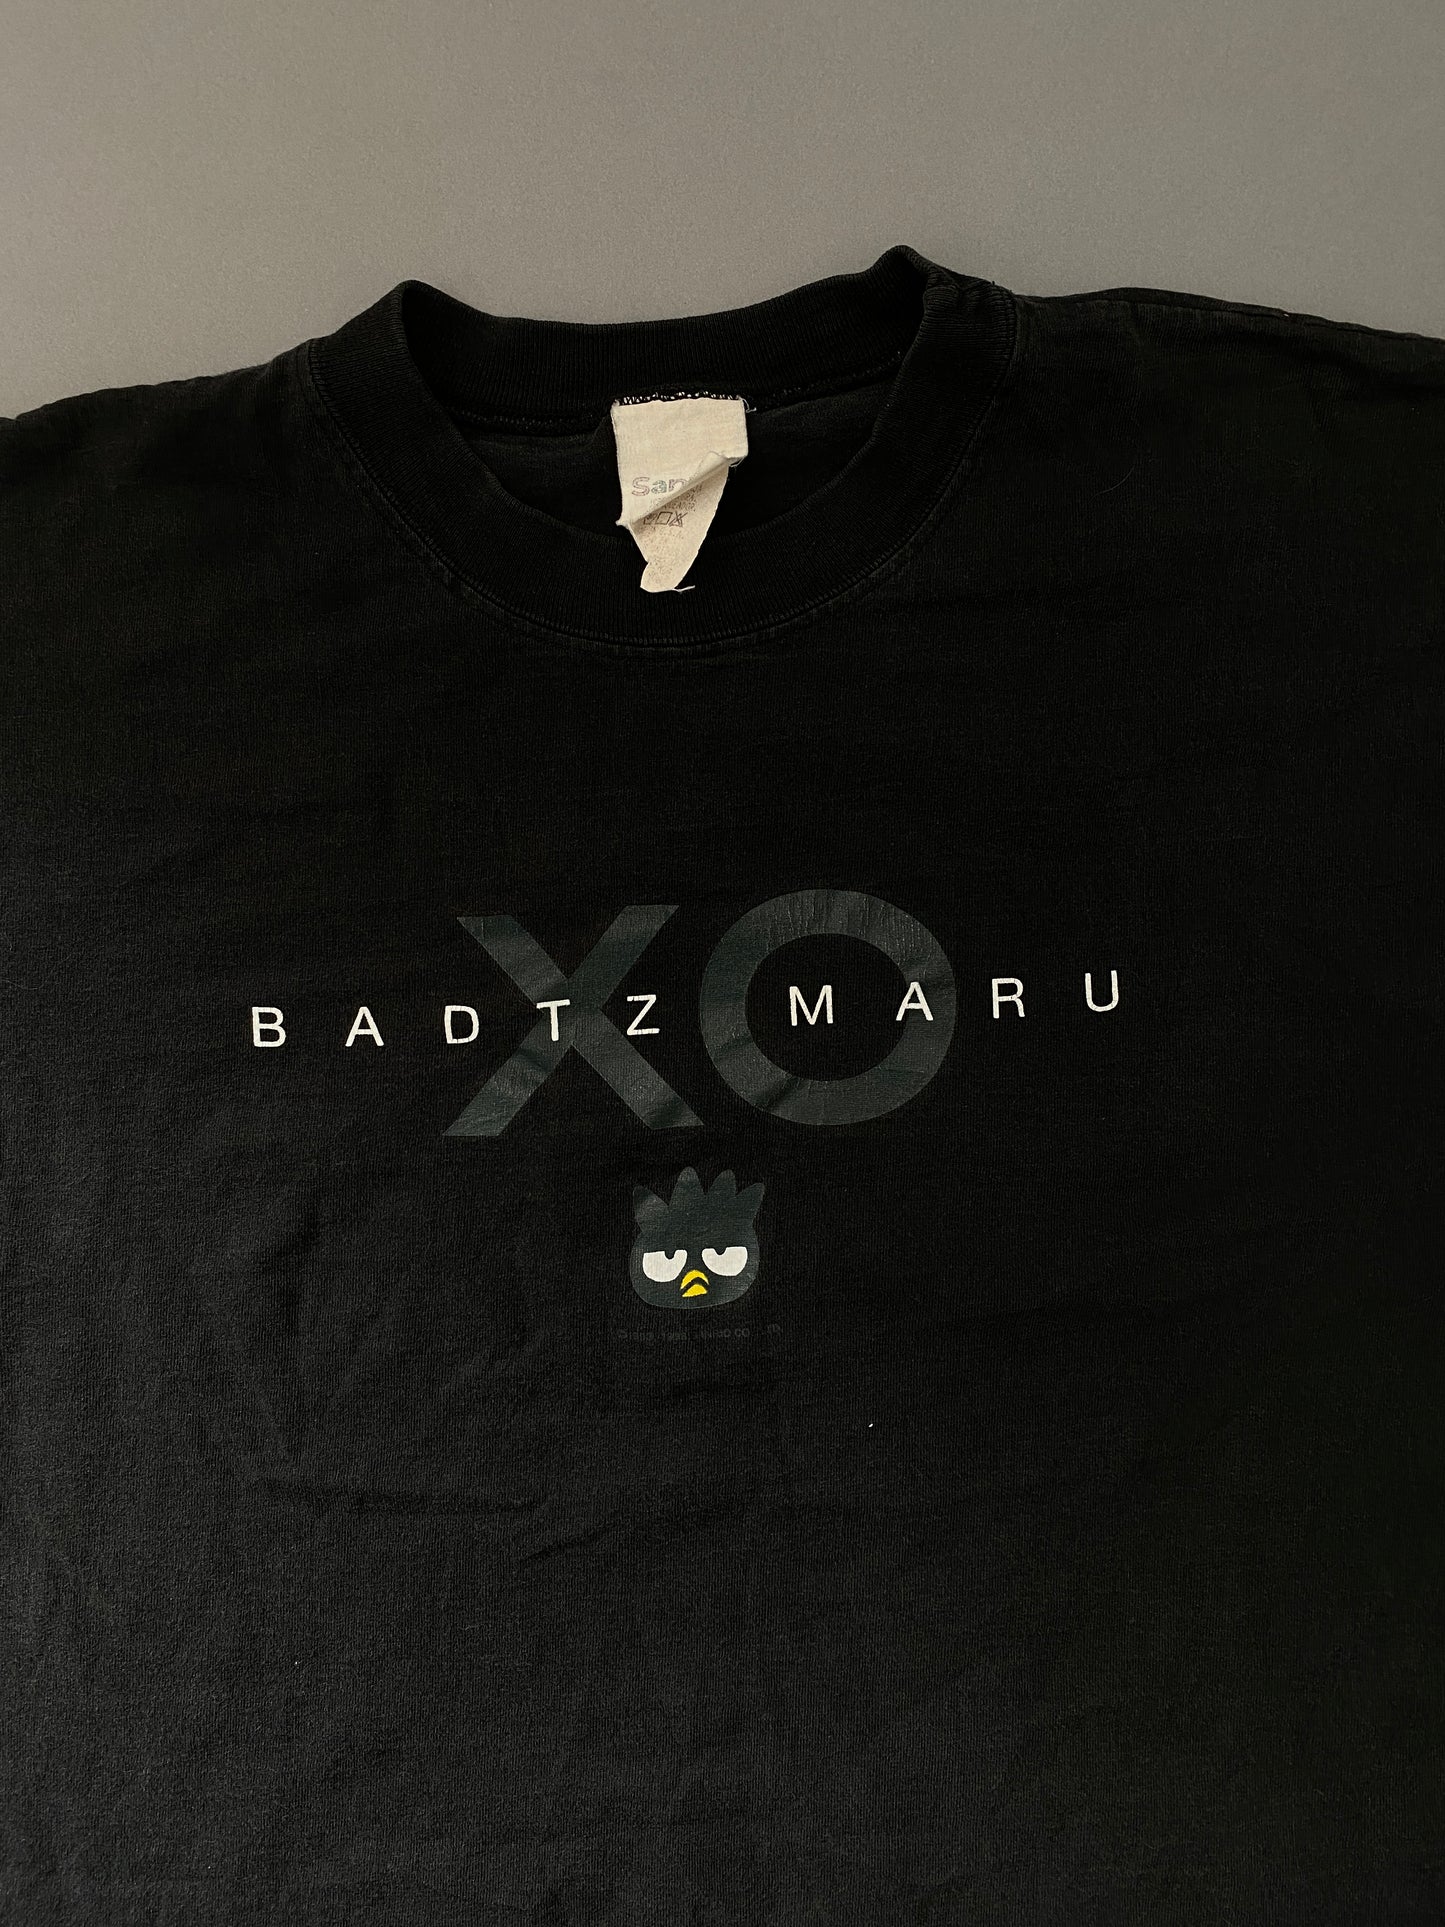 Sanrio 1993 Badtz Maru T-shirt